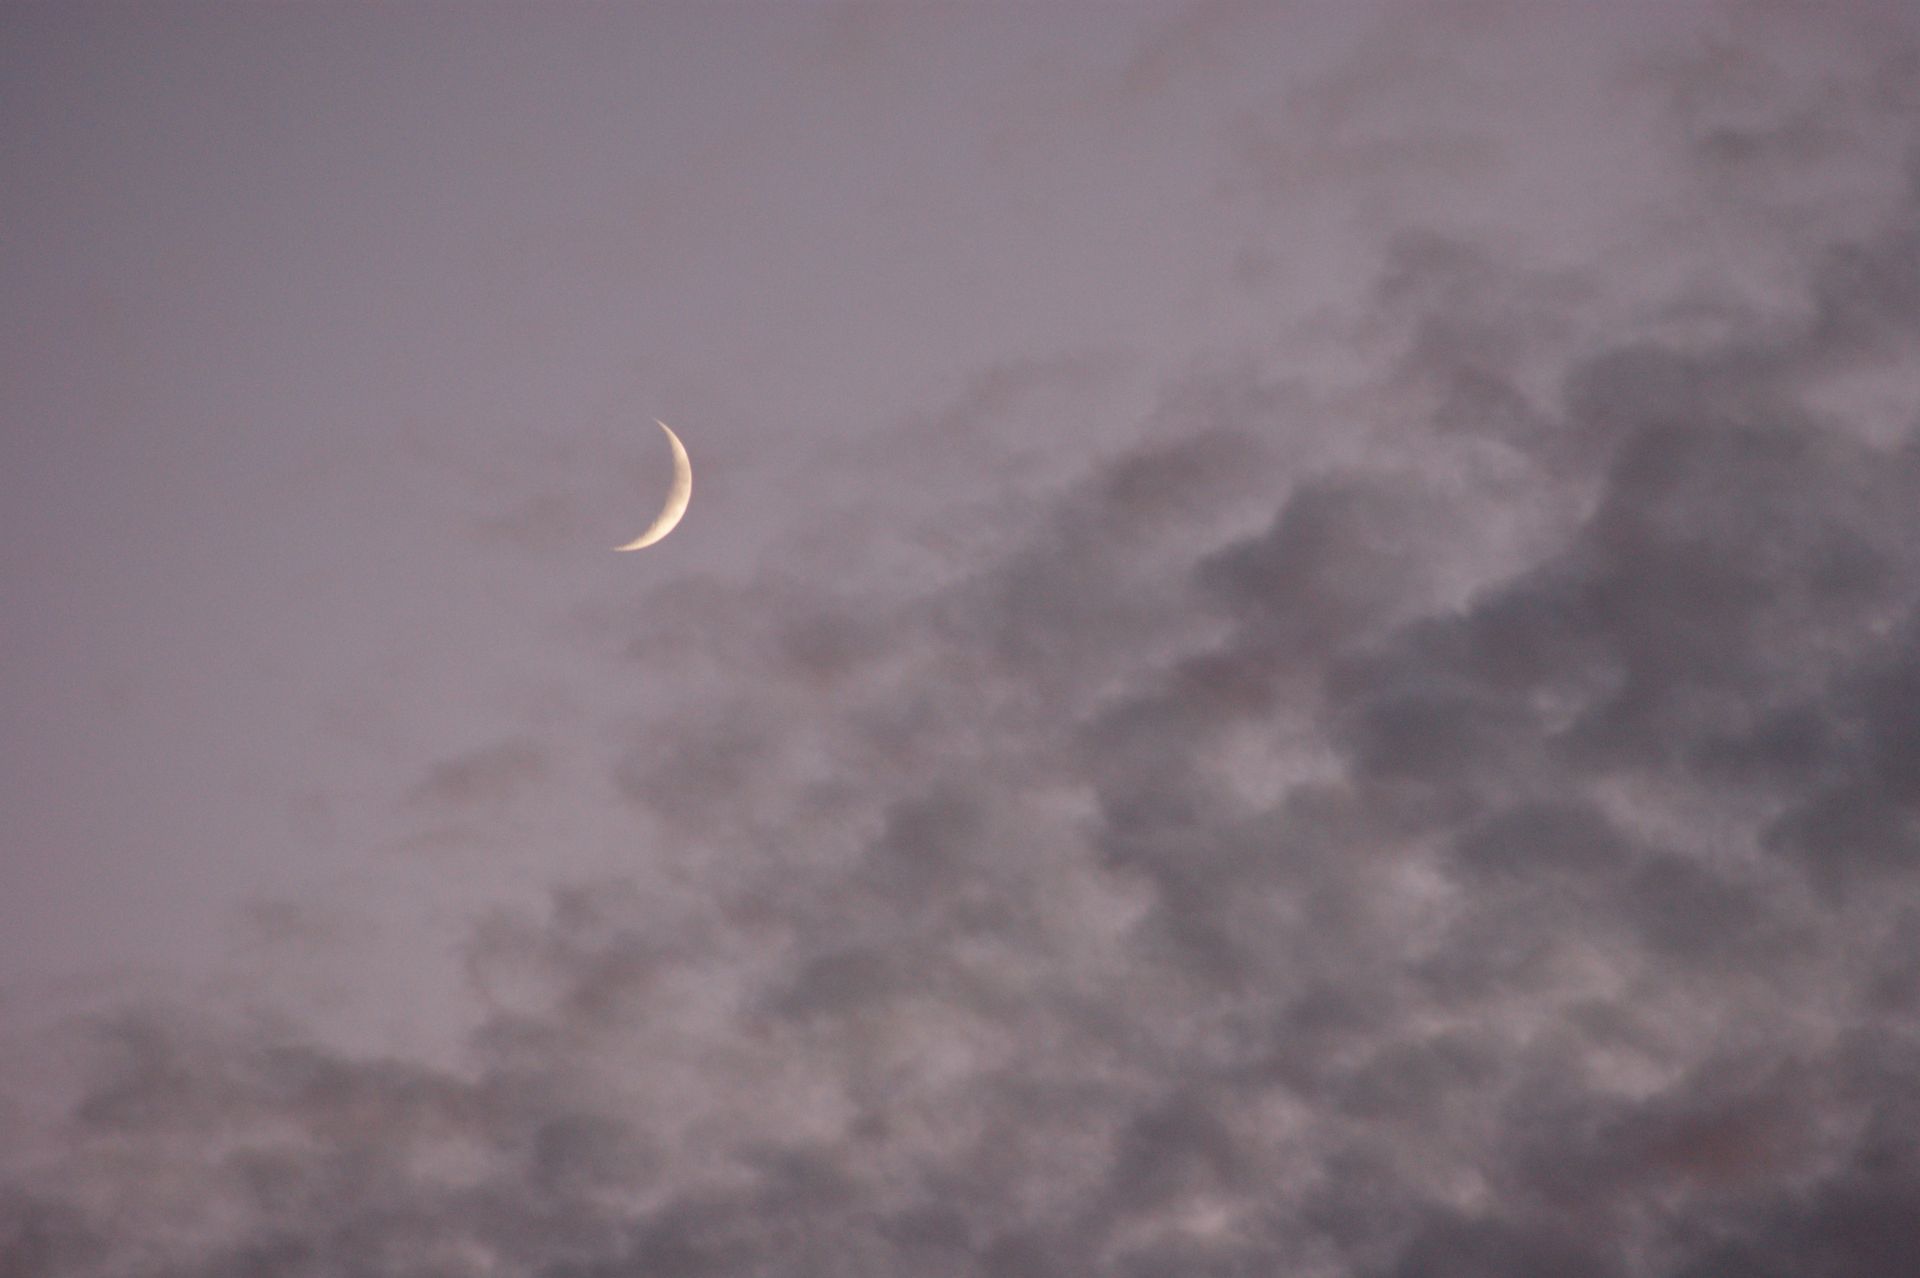 New Cold Moon in Sagittarius - Image by Kai Baron - Upsplash